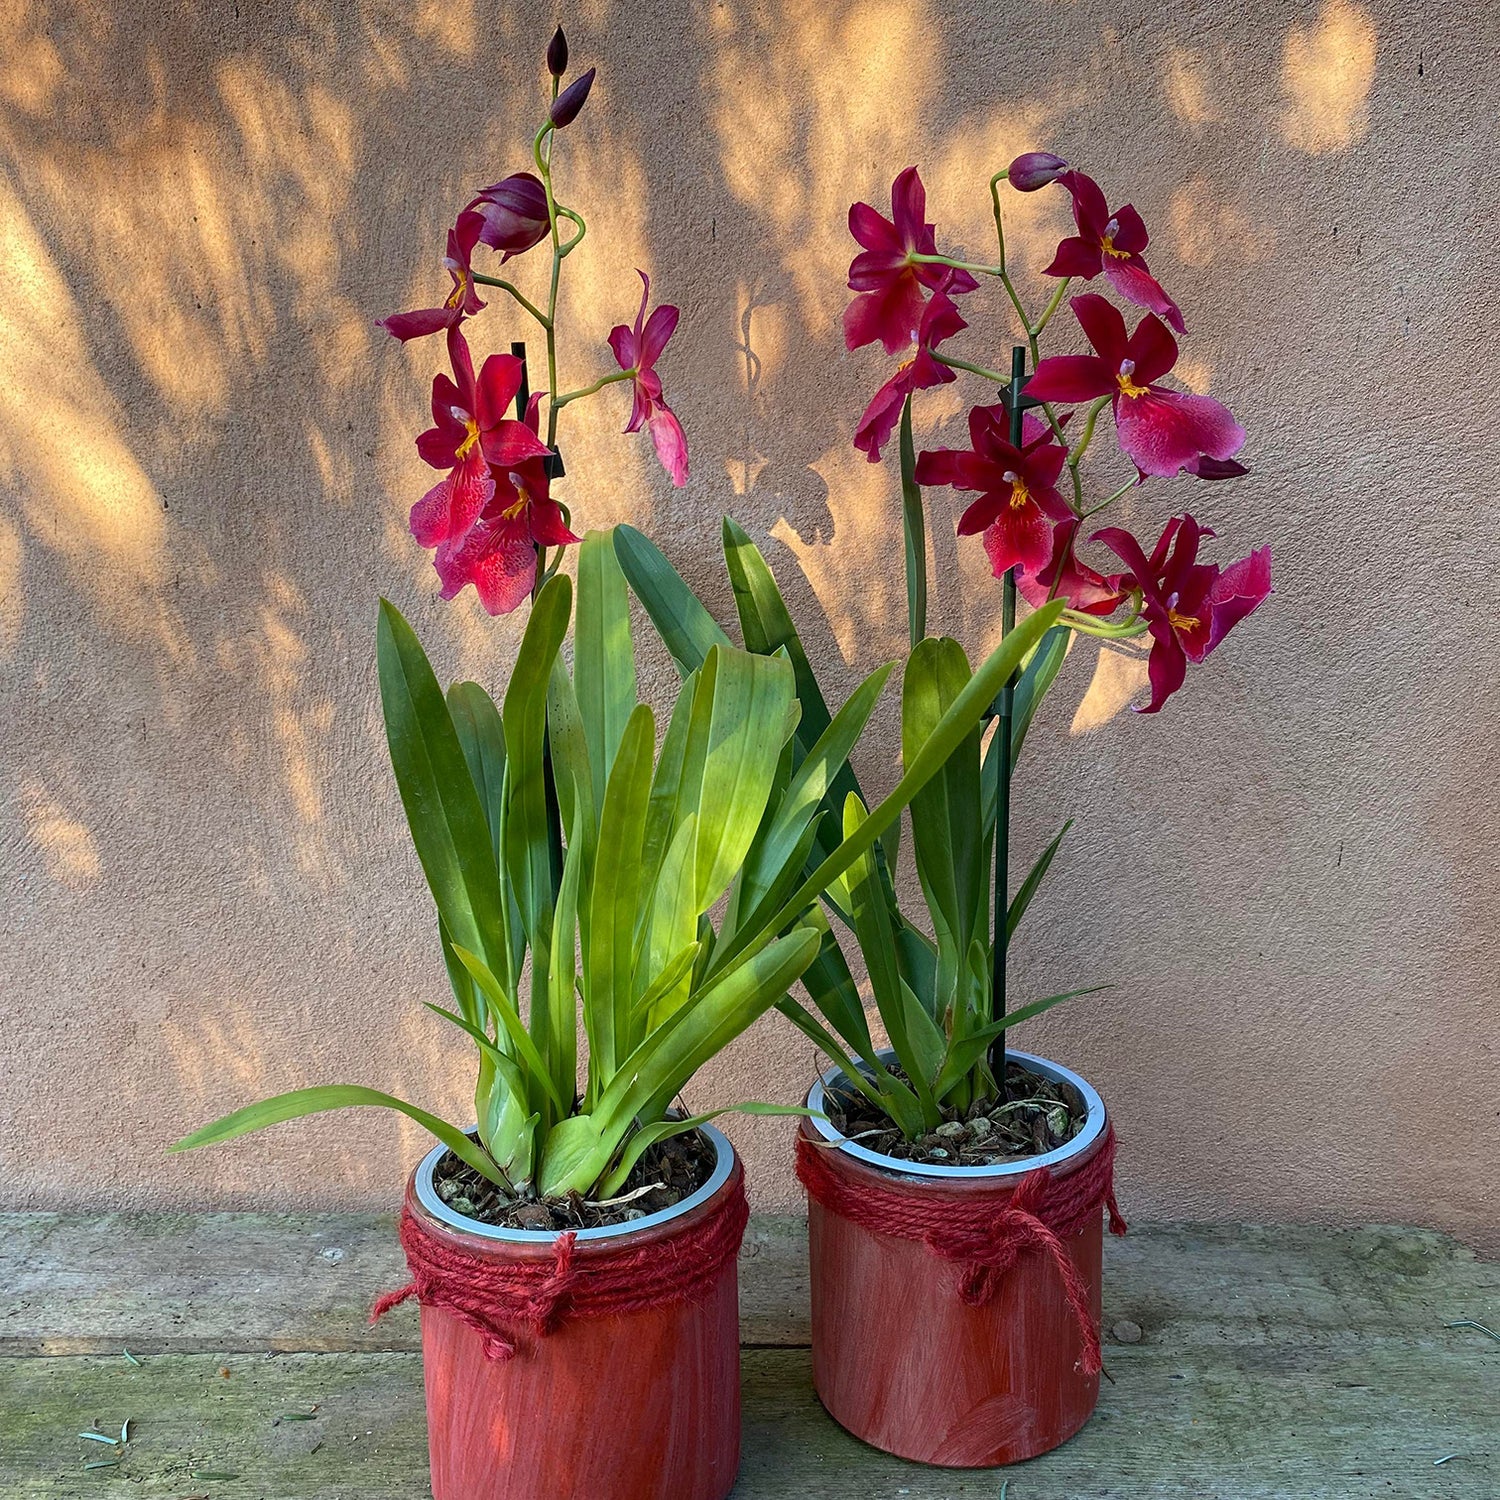 Plante orkidé – Planteskolen Stege Bugt